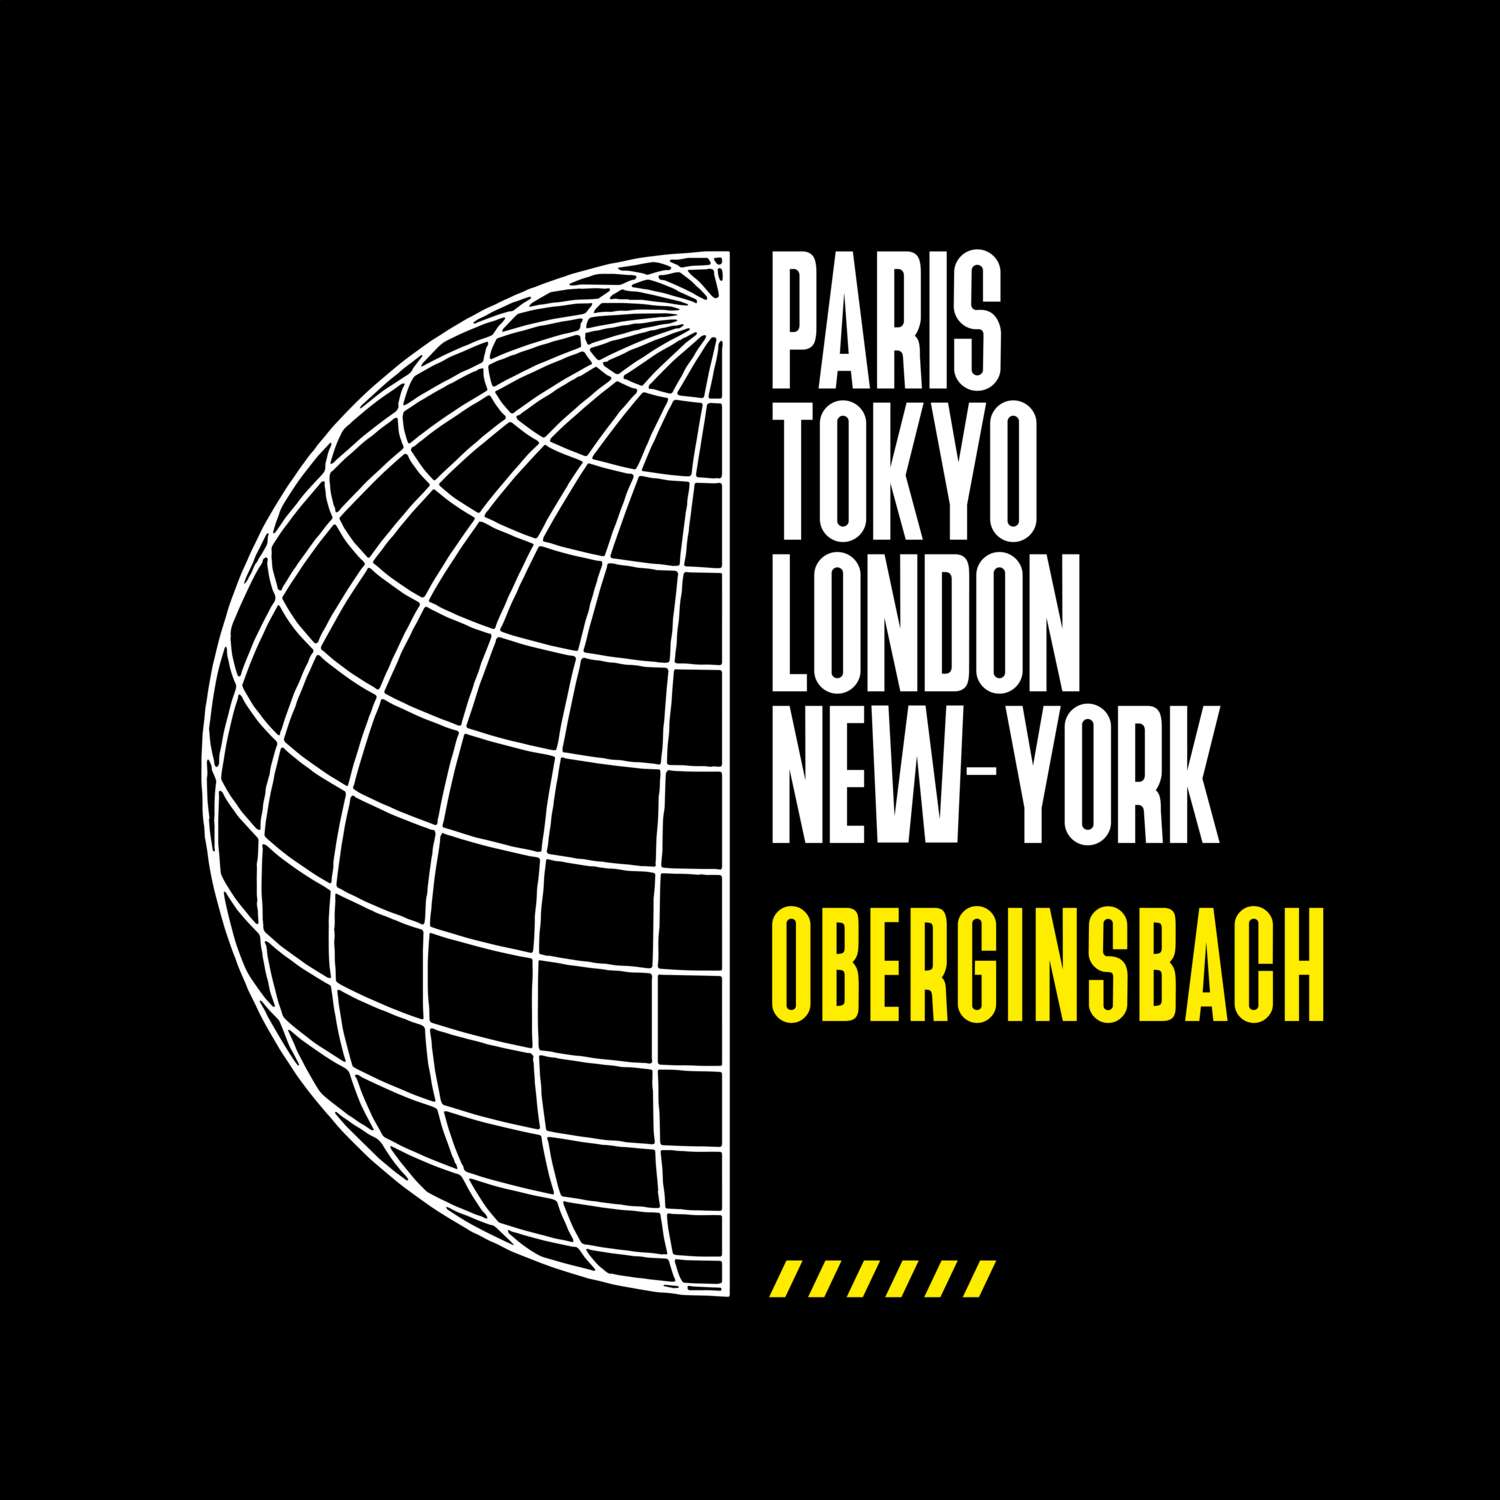 Oberginsbach T-Shirt »Paris Tokyo London«